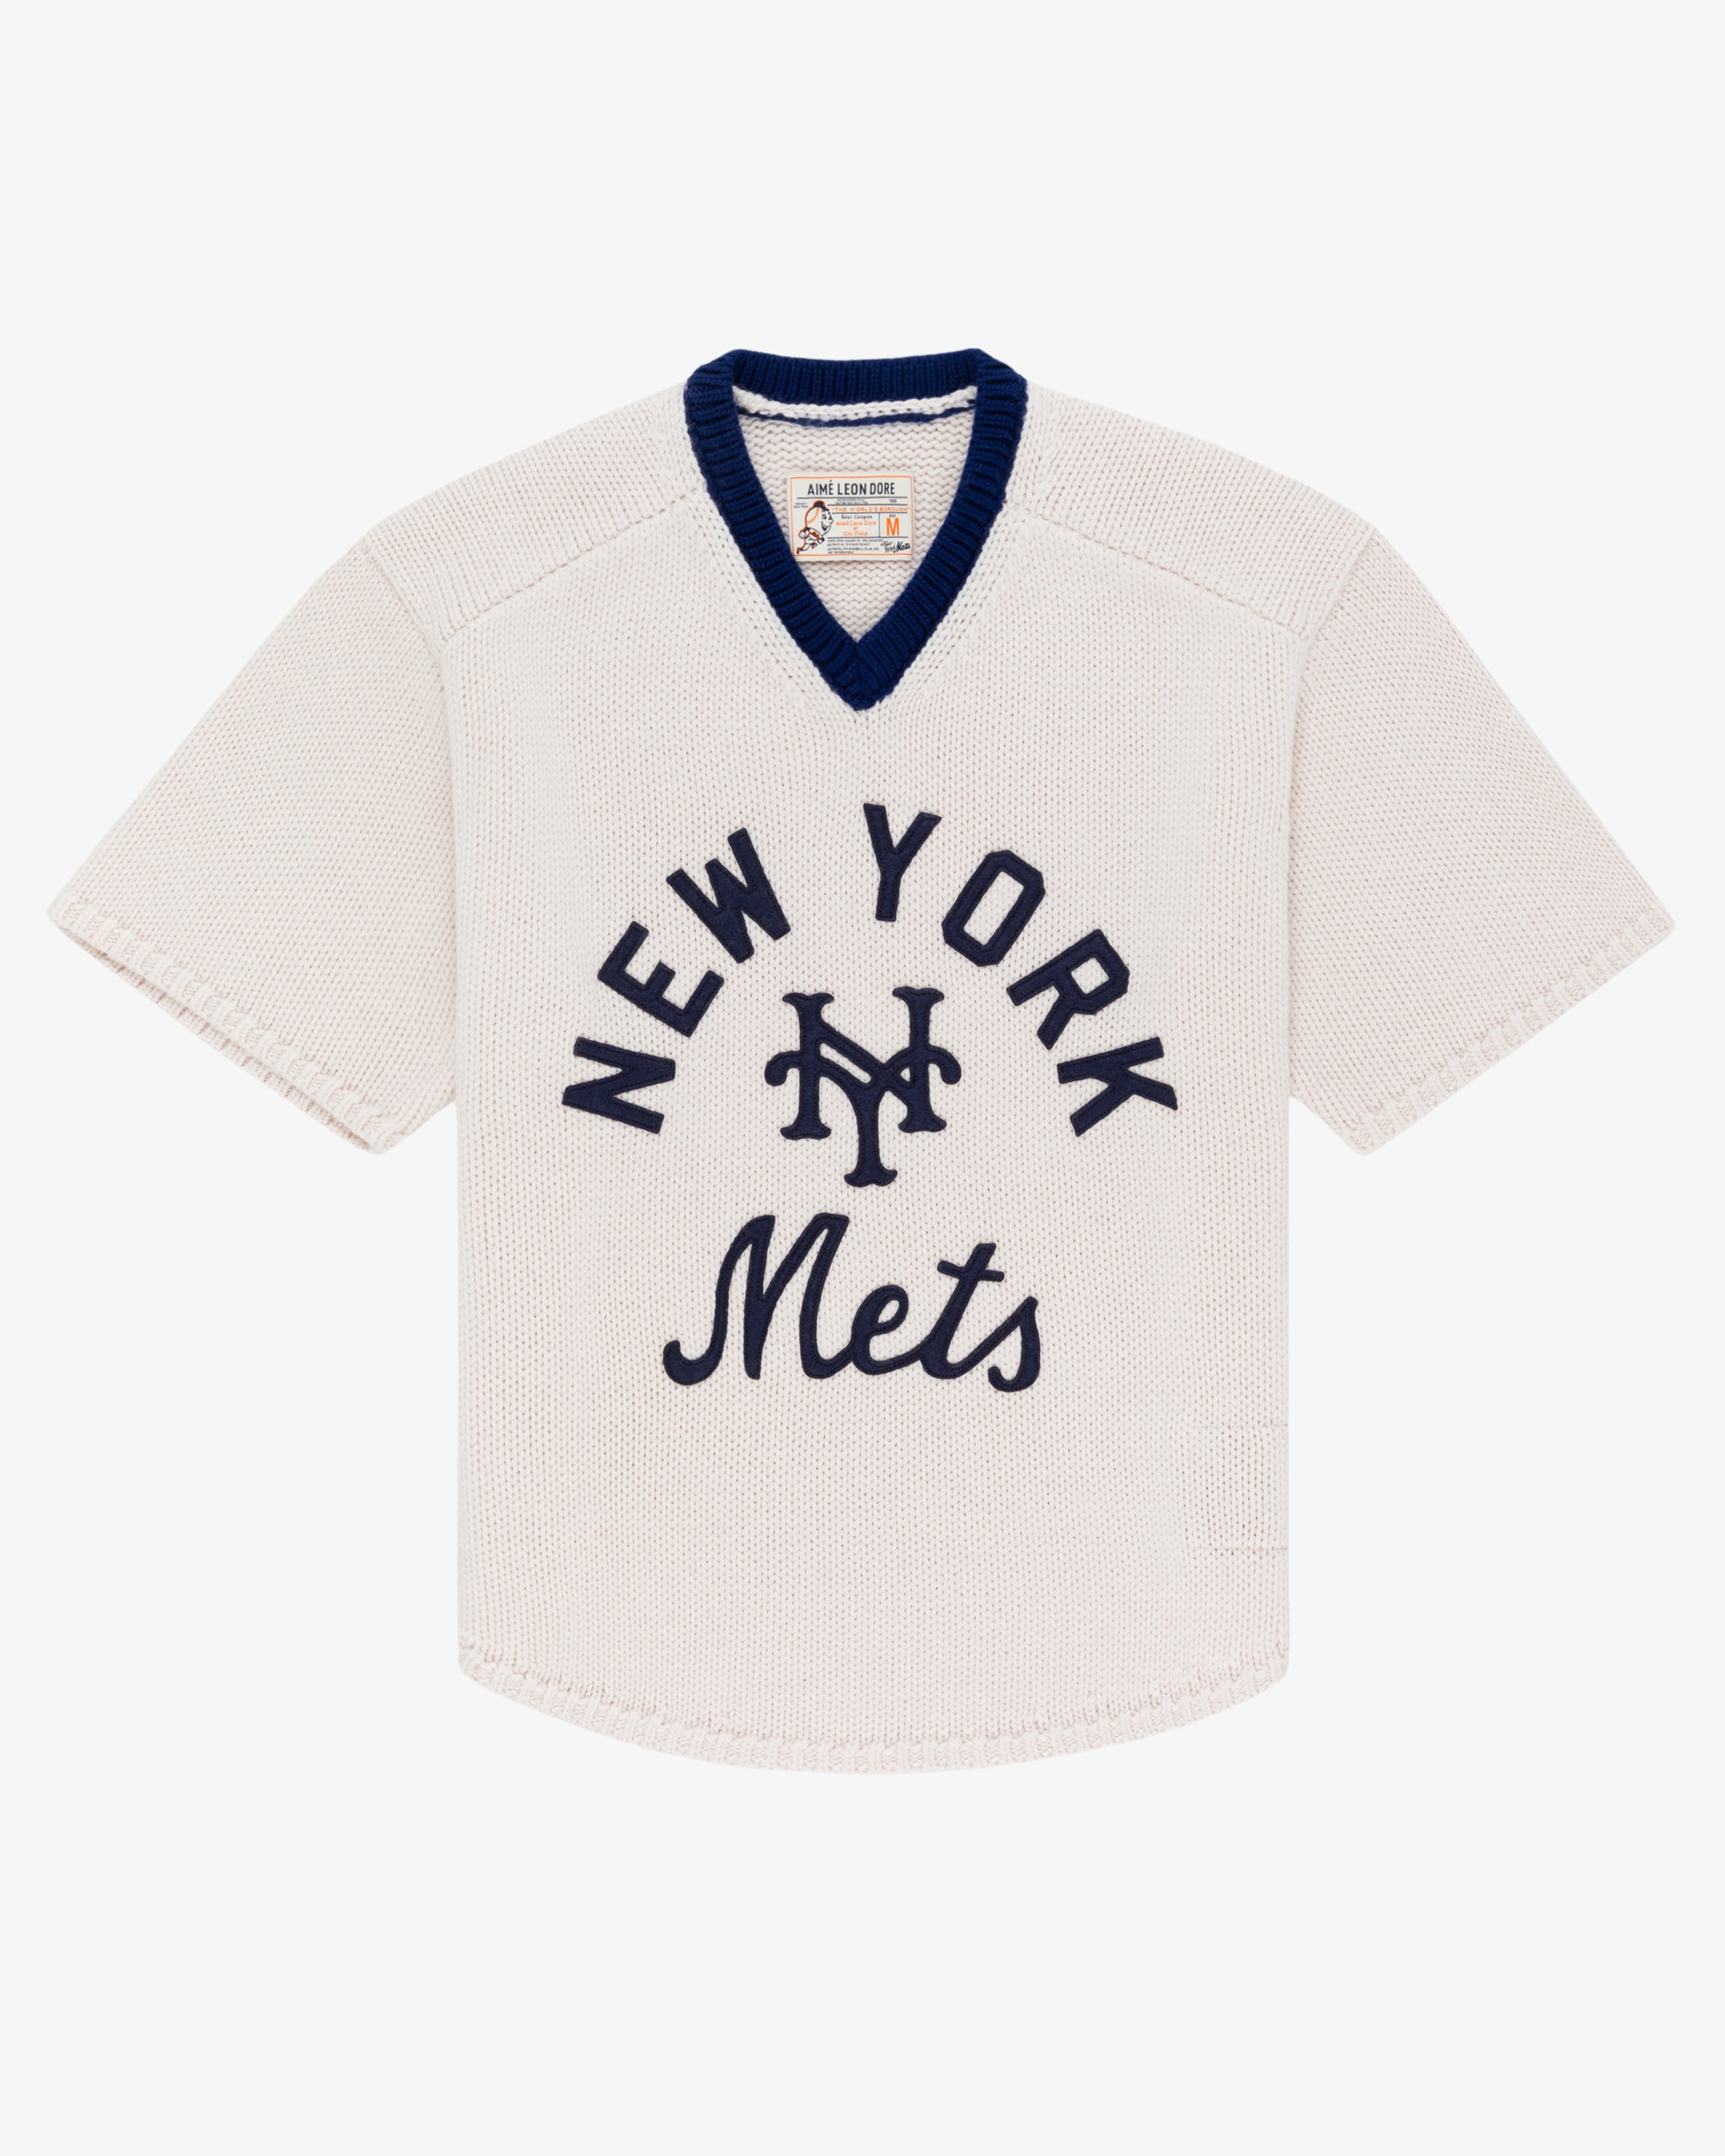 ALD / New York Mets Short-Sleeve Knit Sweater